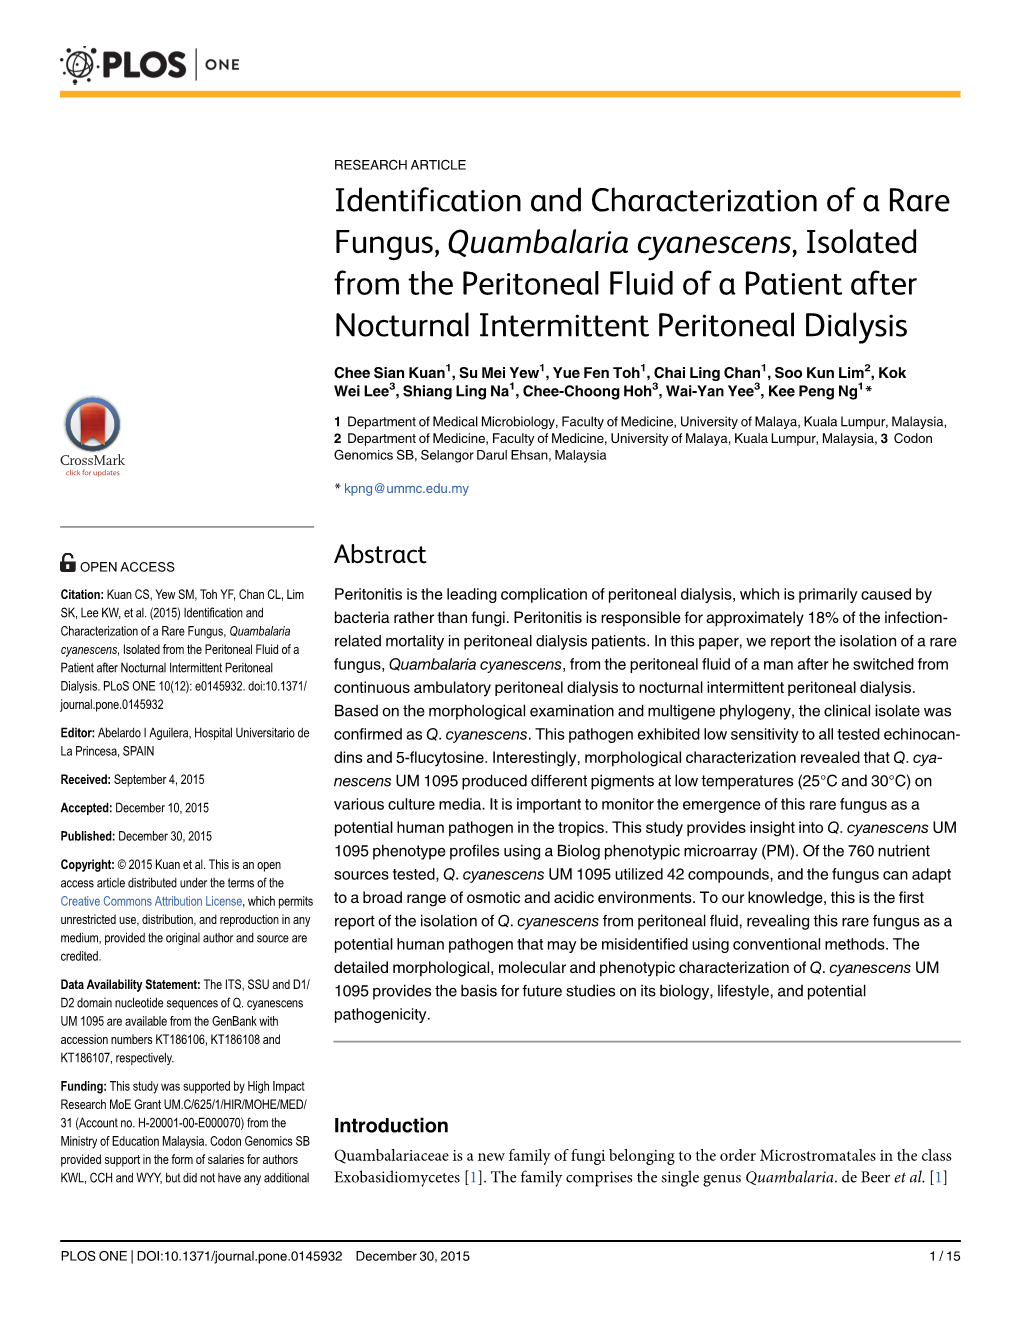 Identification and Characterization of a Rare Fungus, Quambalaria